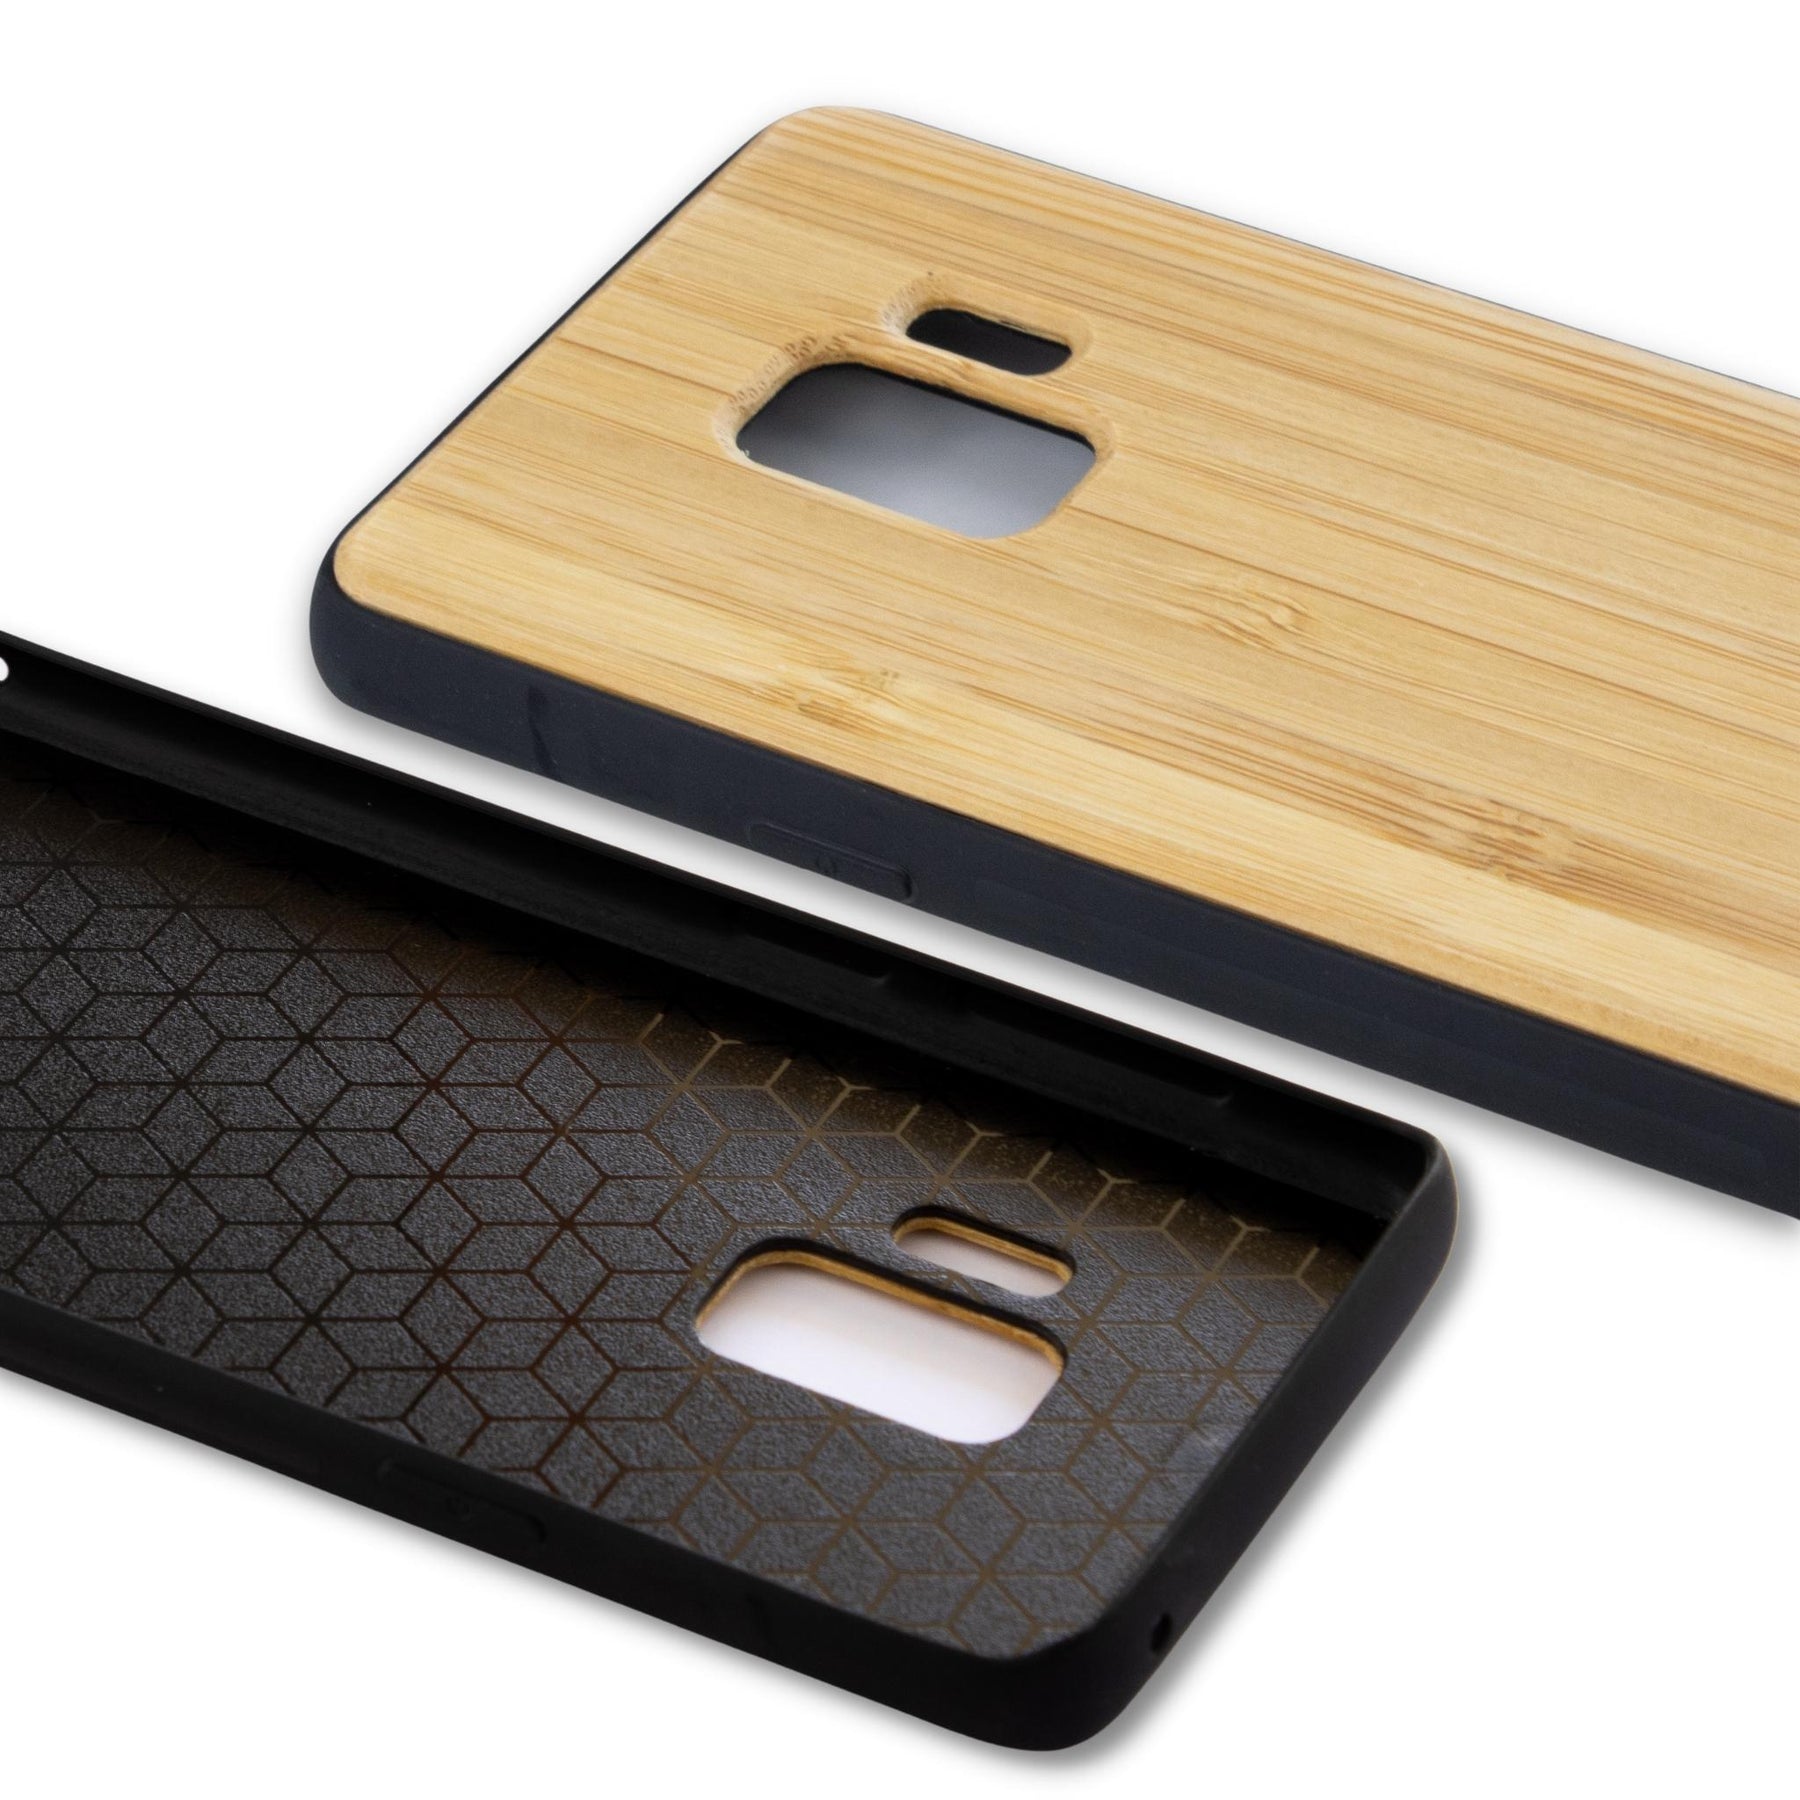 Samsung GS9 Wooden Case + Screen Protector